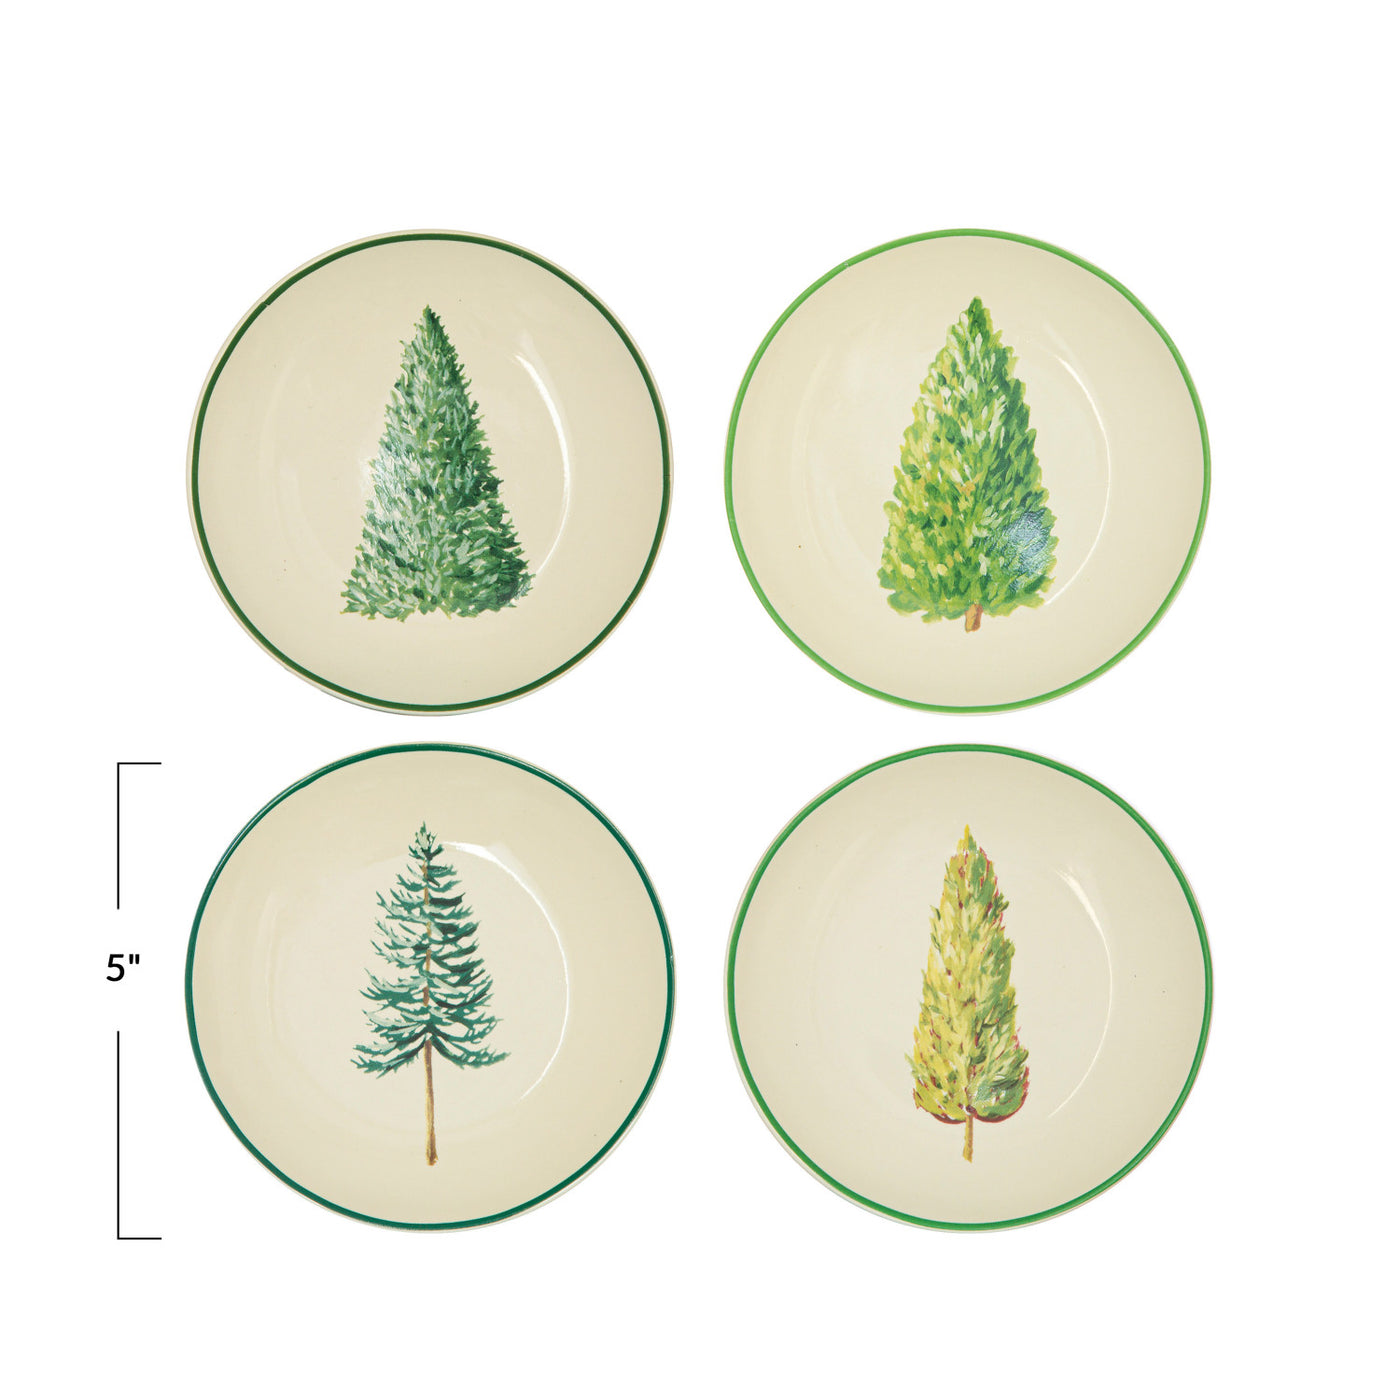 5" Round Hand-Painted Stoneware Plate w/ Evergreens